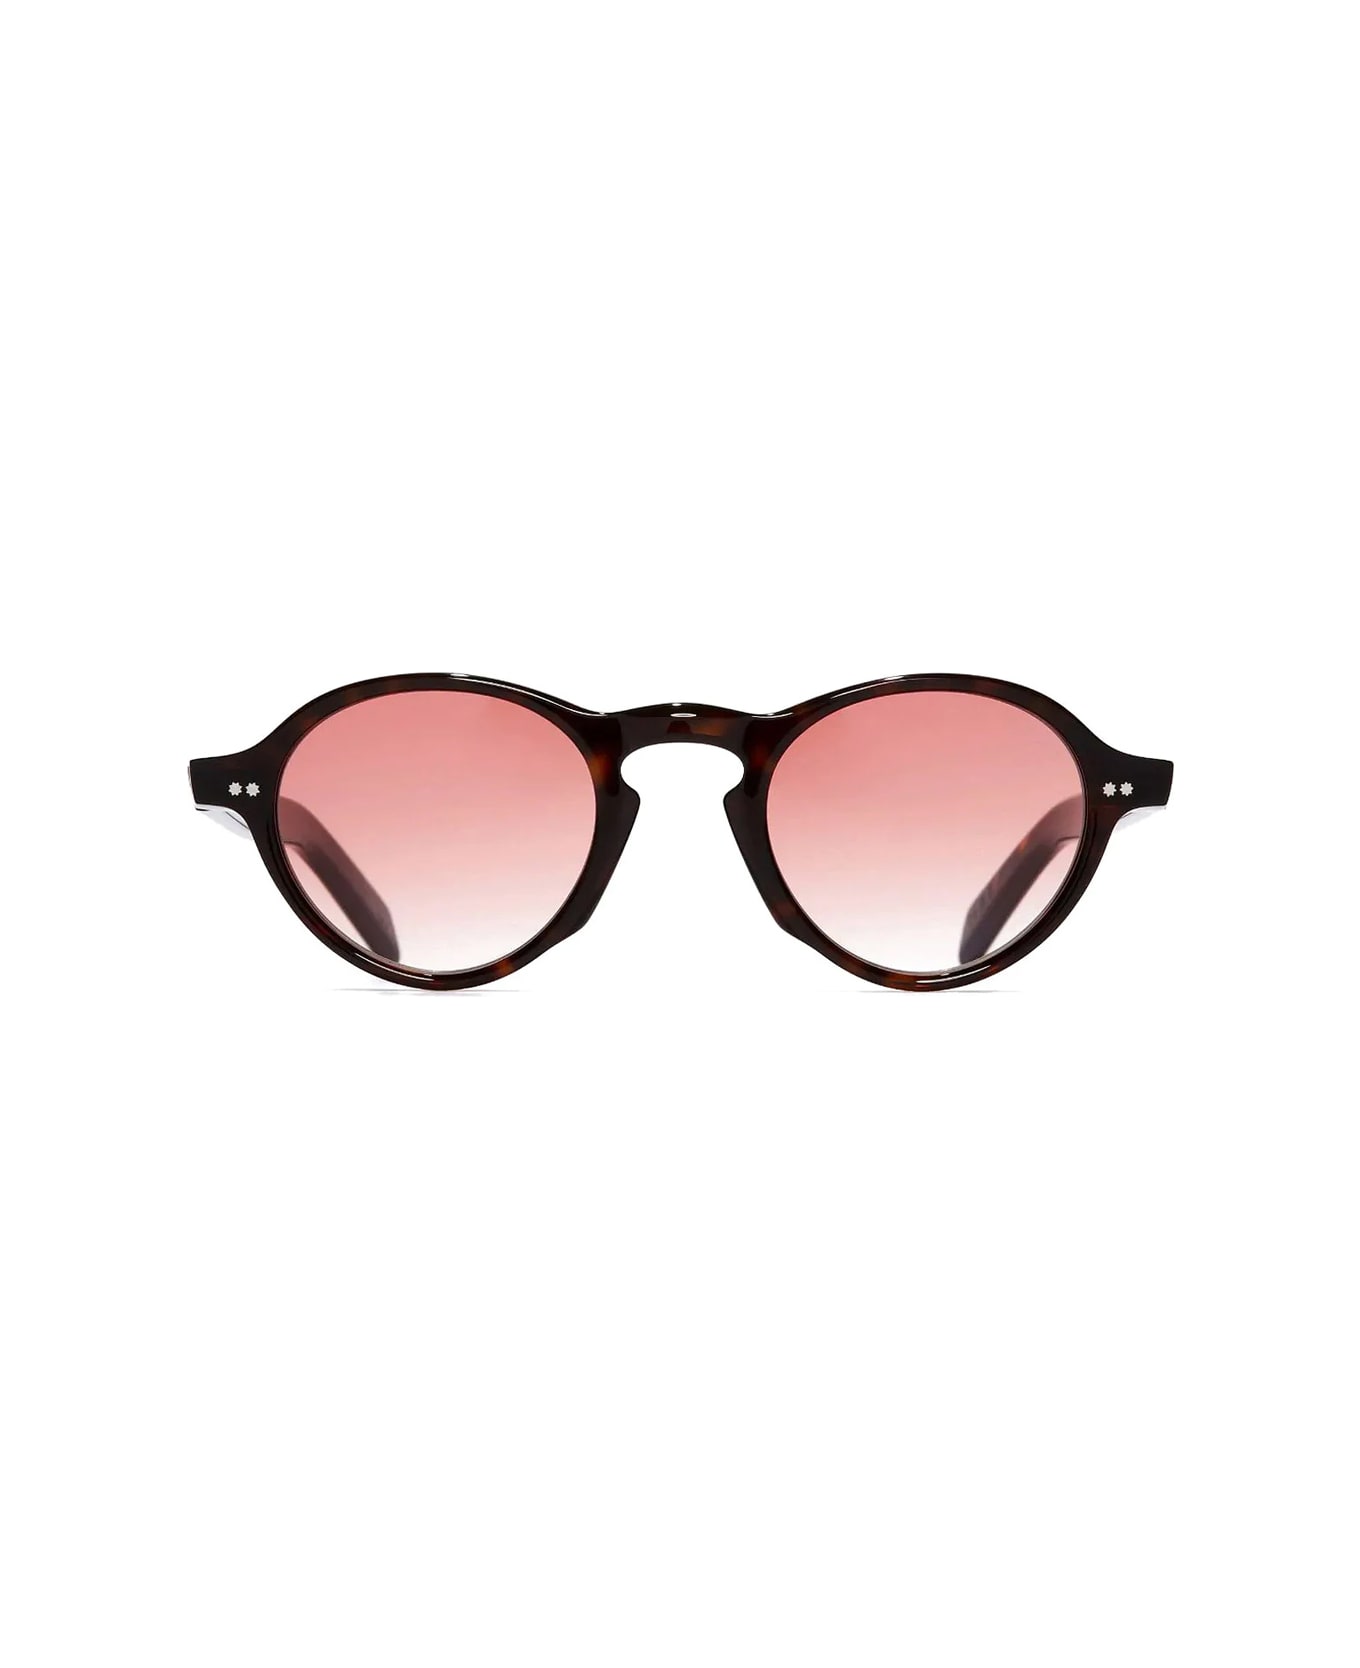 Cutler and Gross Gr08 03 Havana Sunglasses - Marrone サングラス